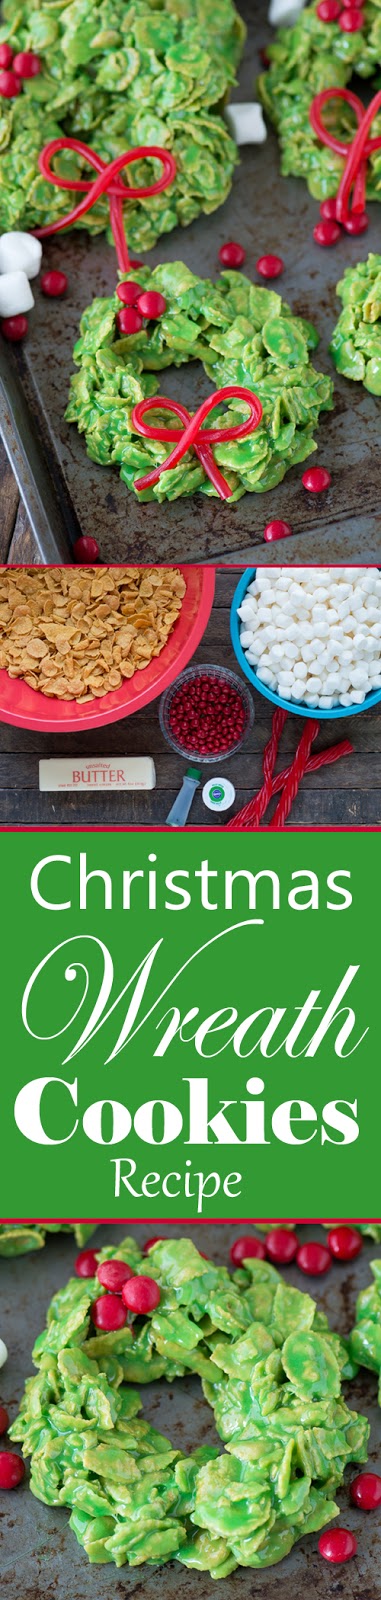 Easy to Make Christmas Wreath Cookies Recipe